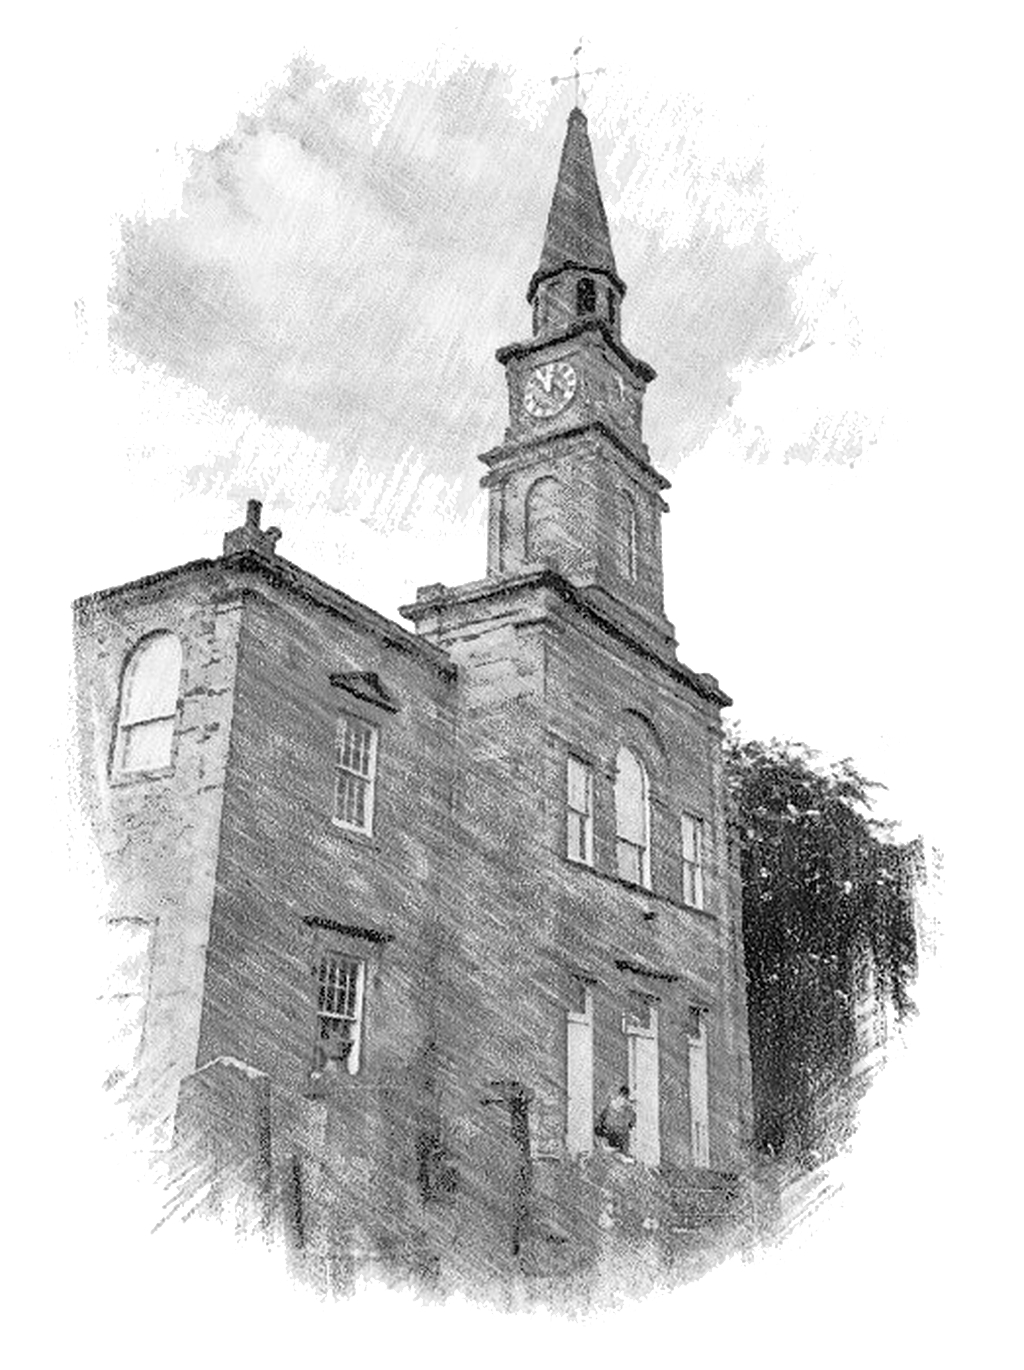 Tarbolton Parish Church - Composed by John C Grant (https://johncgrant.com). Traditional composer from Kilmarnock, Ayrshire, Scotland.